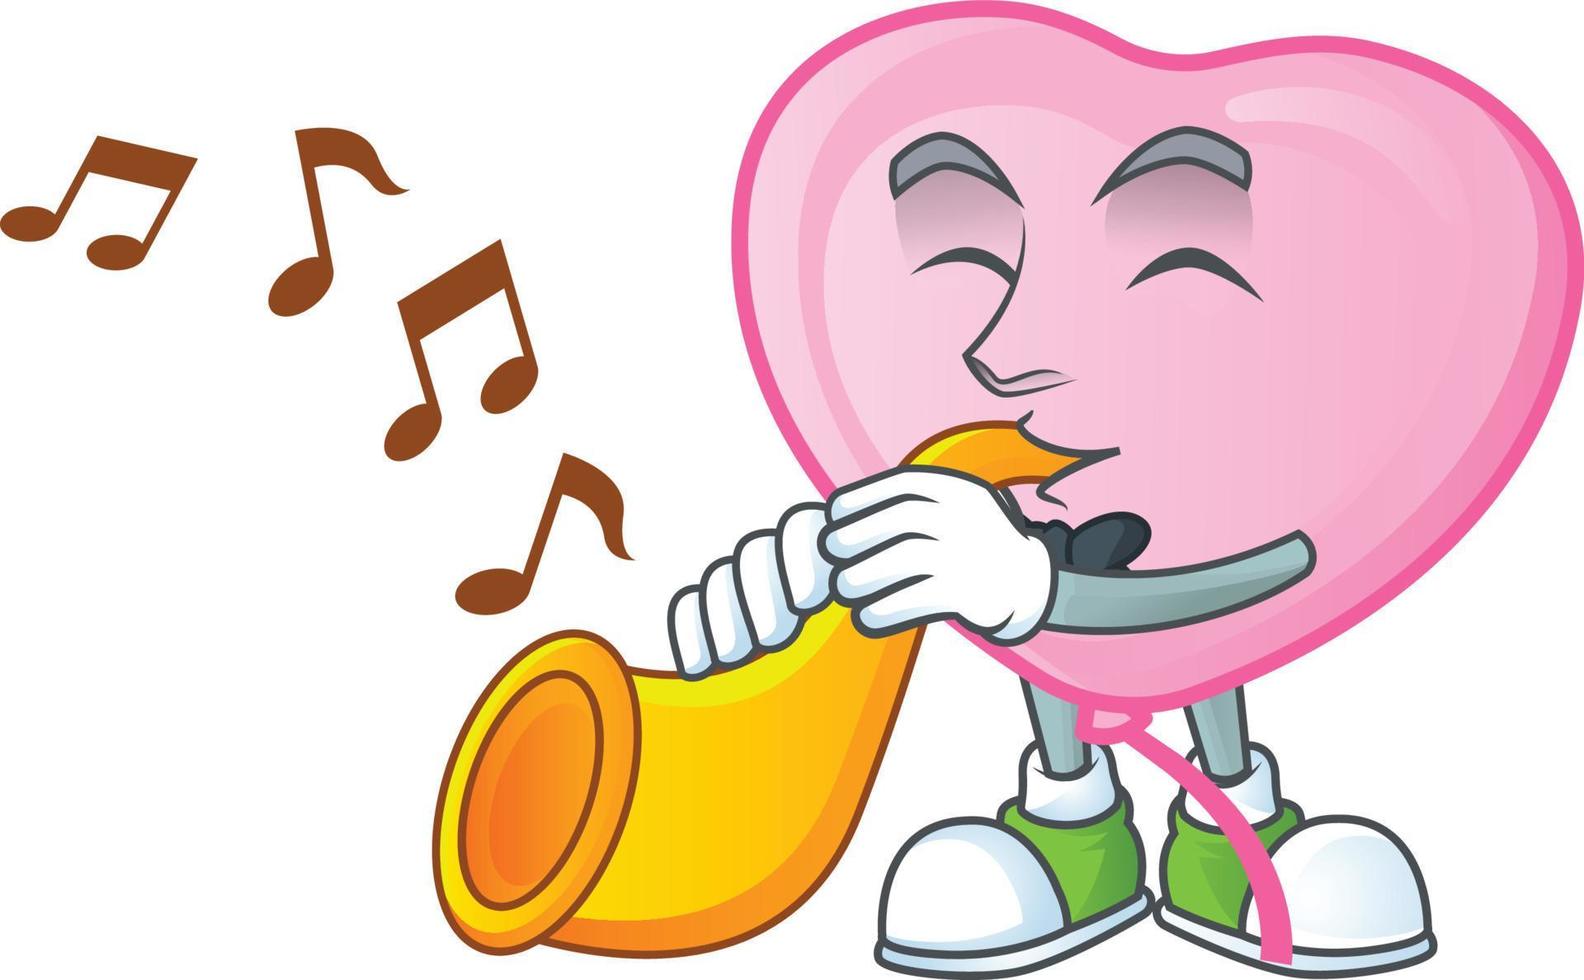 rosado amor globo dibujos animados personaje estilo vector